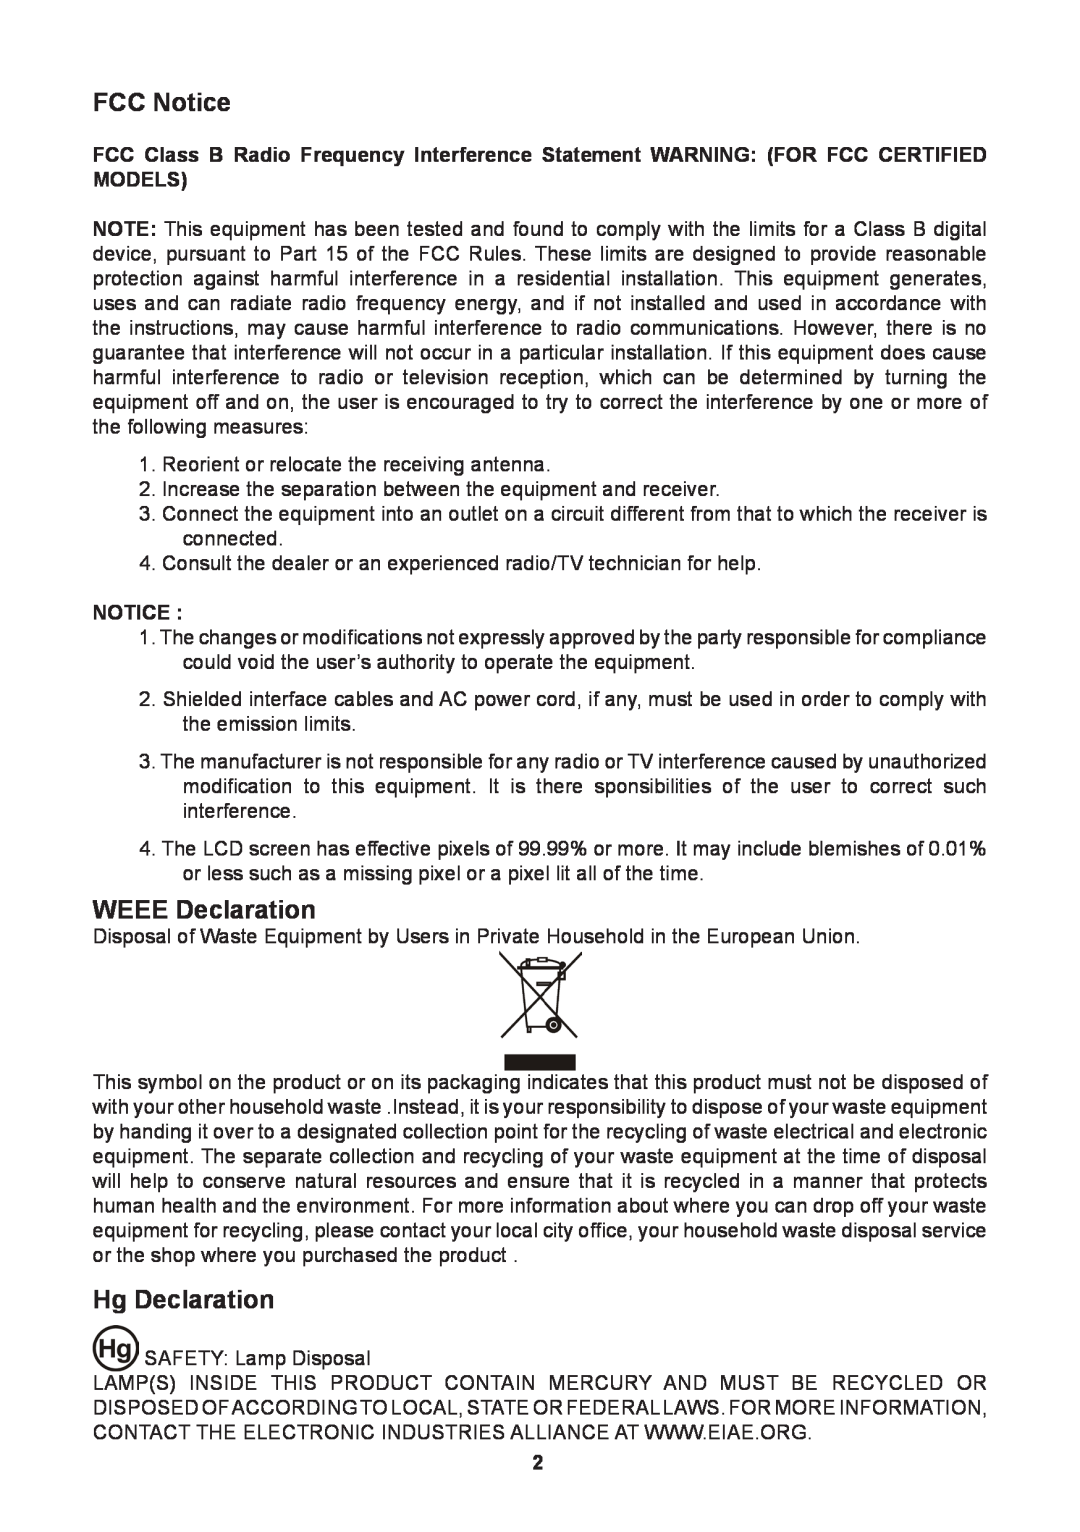 Lenovo D1960 manual FCC Notice, WEEE Declaration, Hg Declaration 